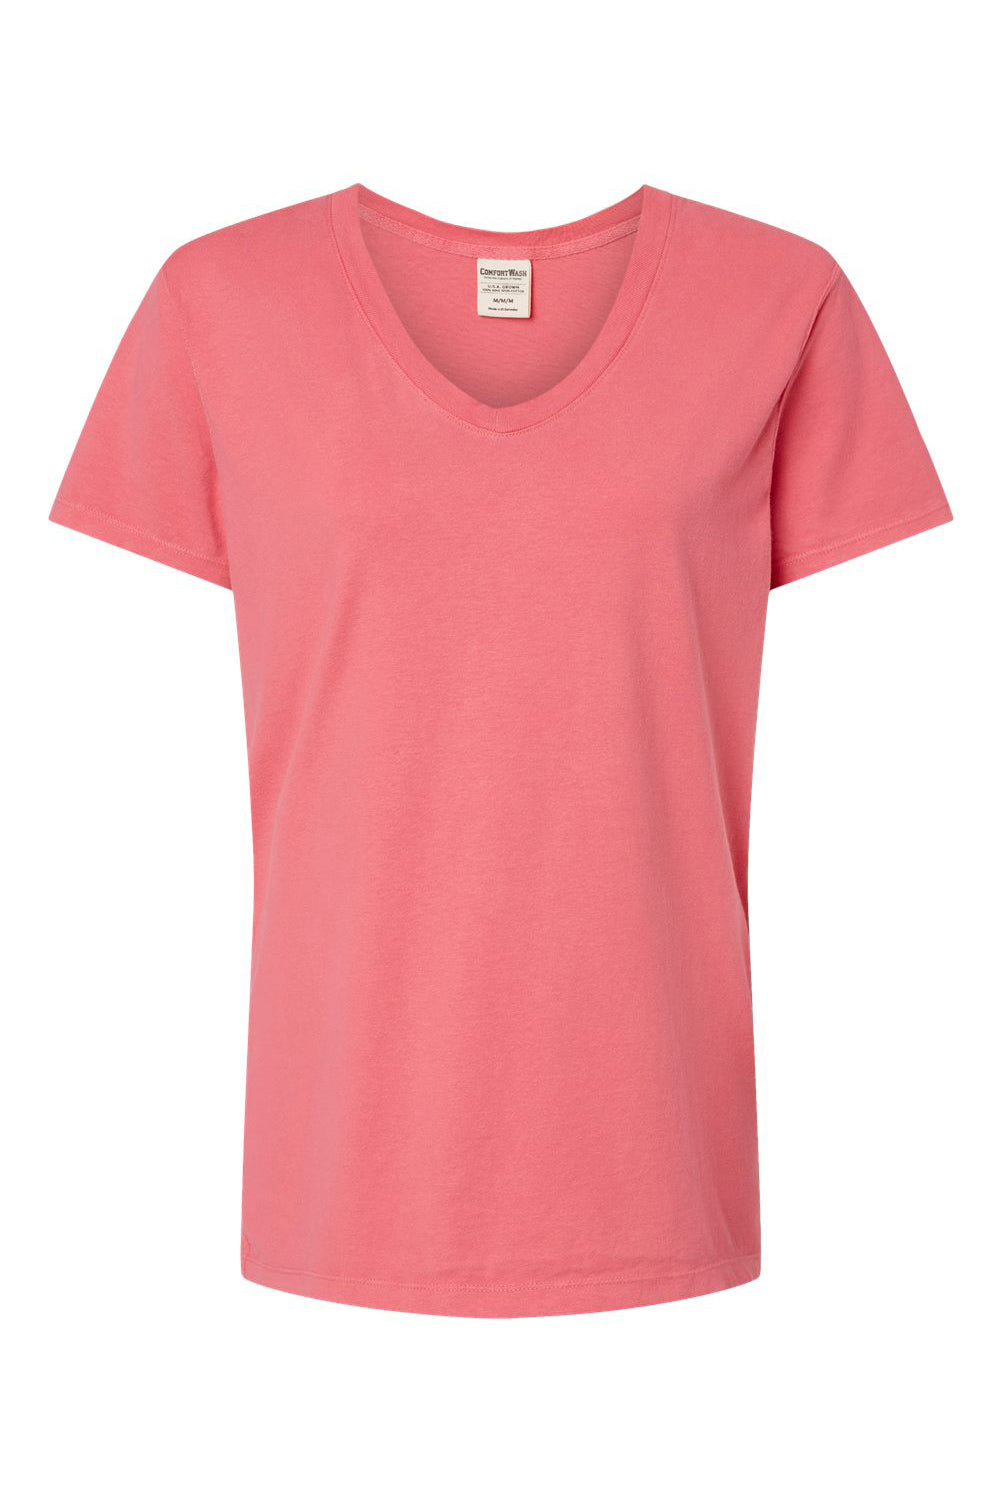 ComfortWash By Hanes GDH125 Mens Garment Dyed Short Sleeve V-Neck T-Shirt Coral Craze Flat Front